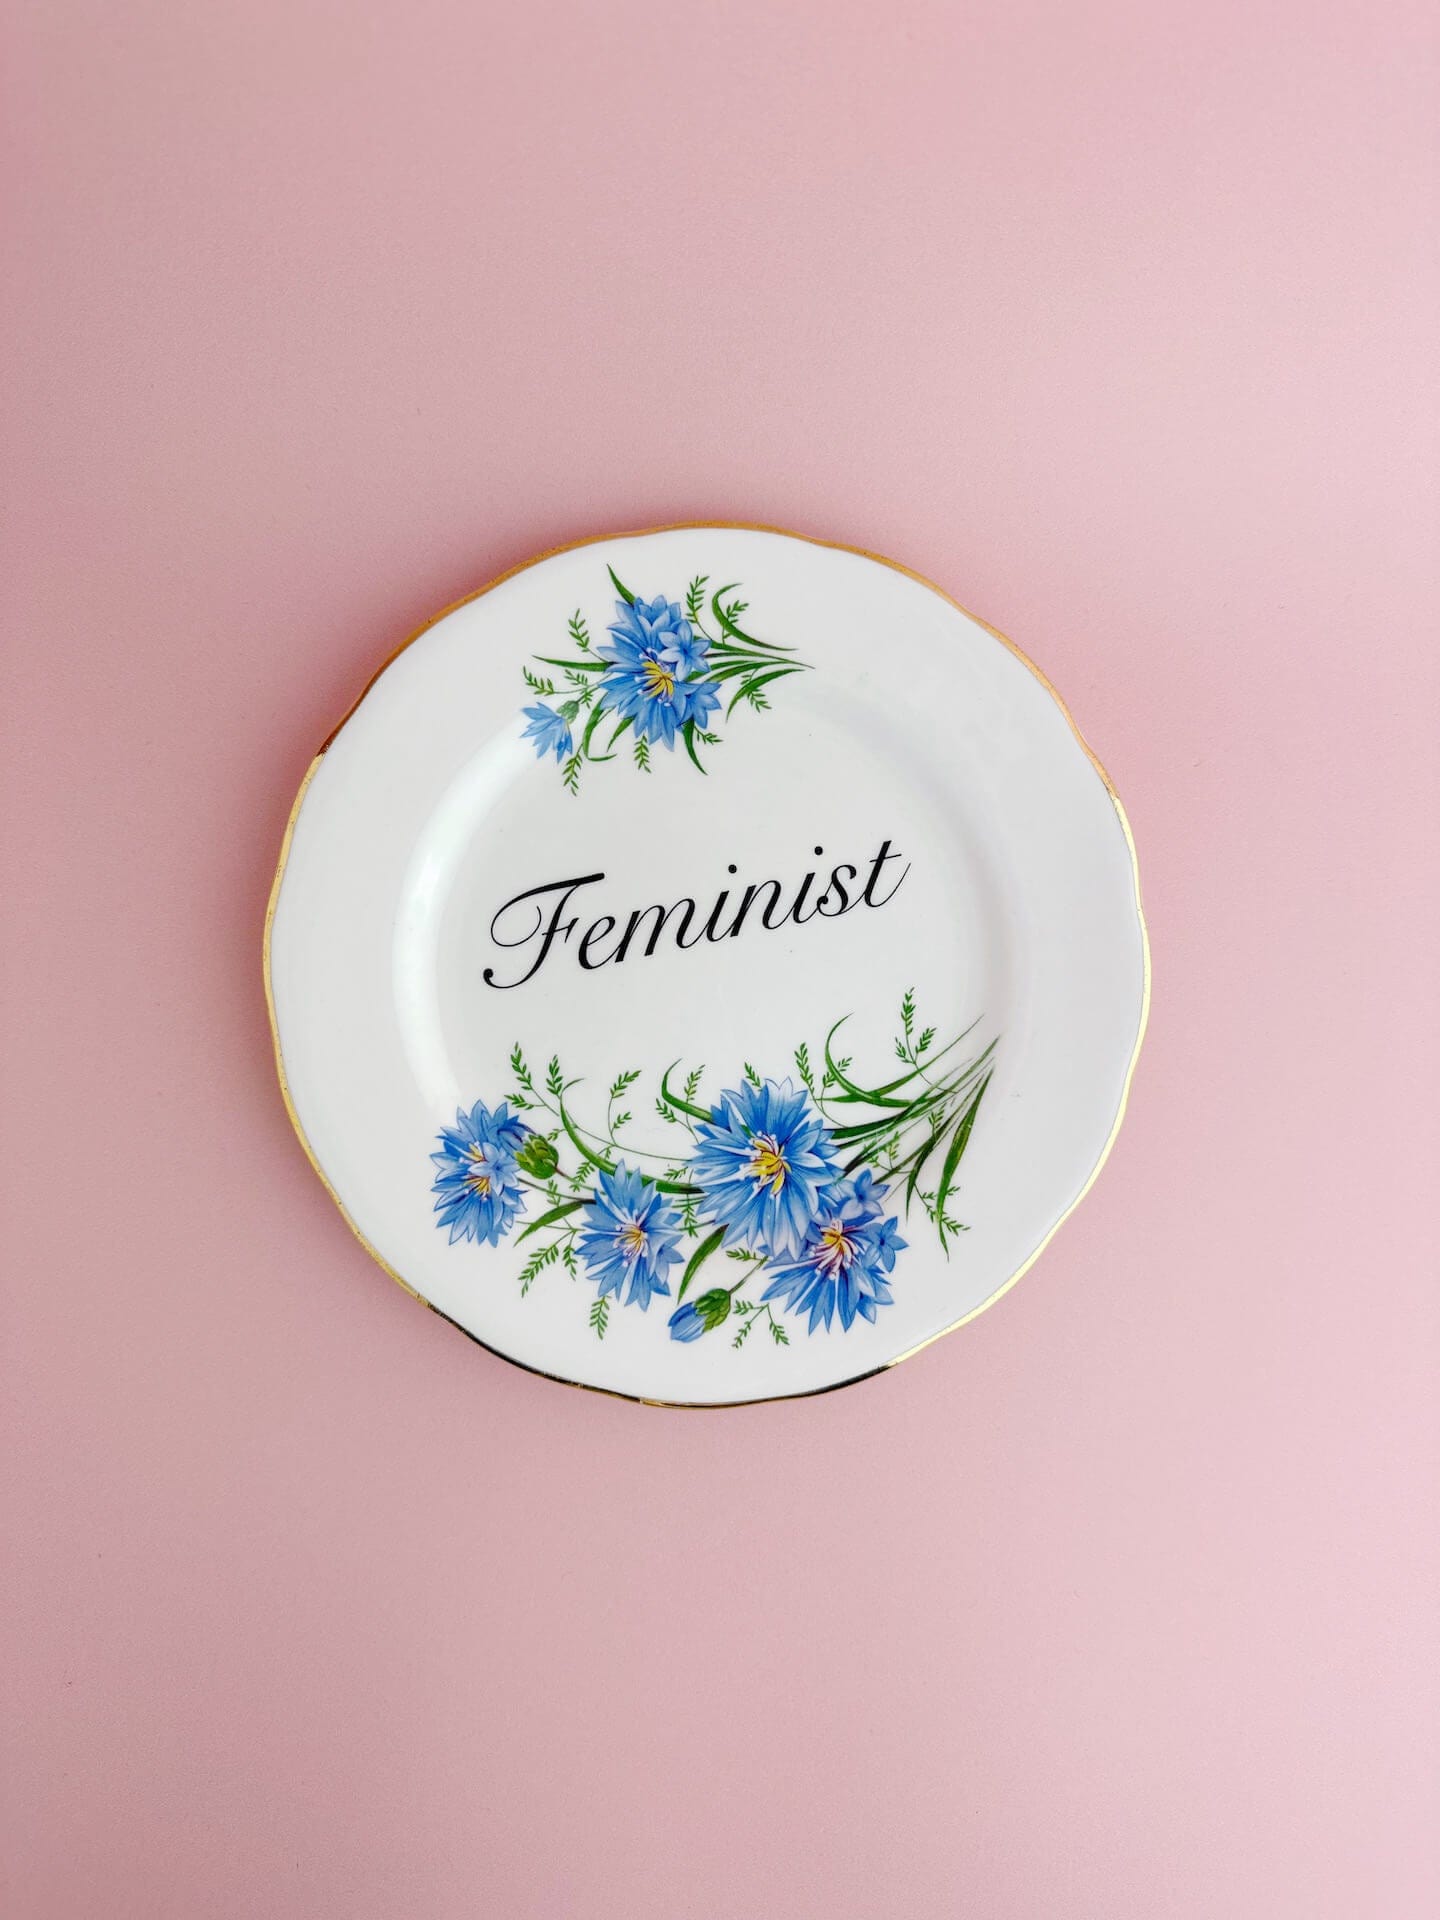 Beau & Badger Ceramics #63 Decorative Wall Plate - Feminist (multiple designs)